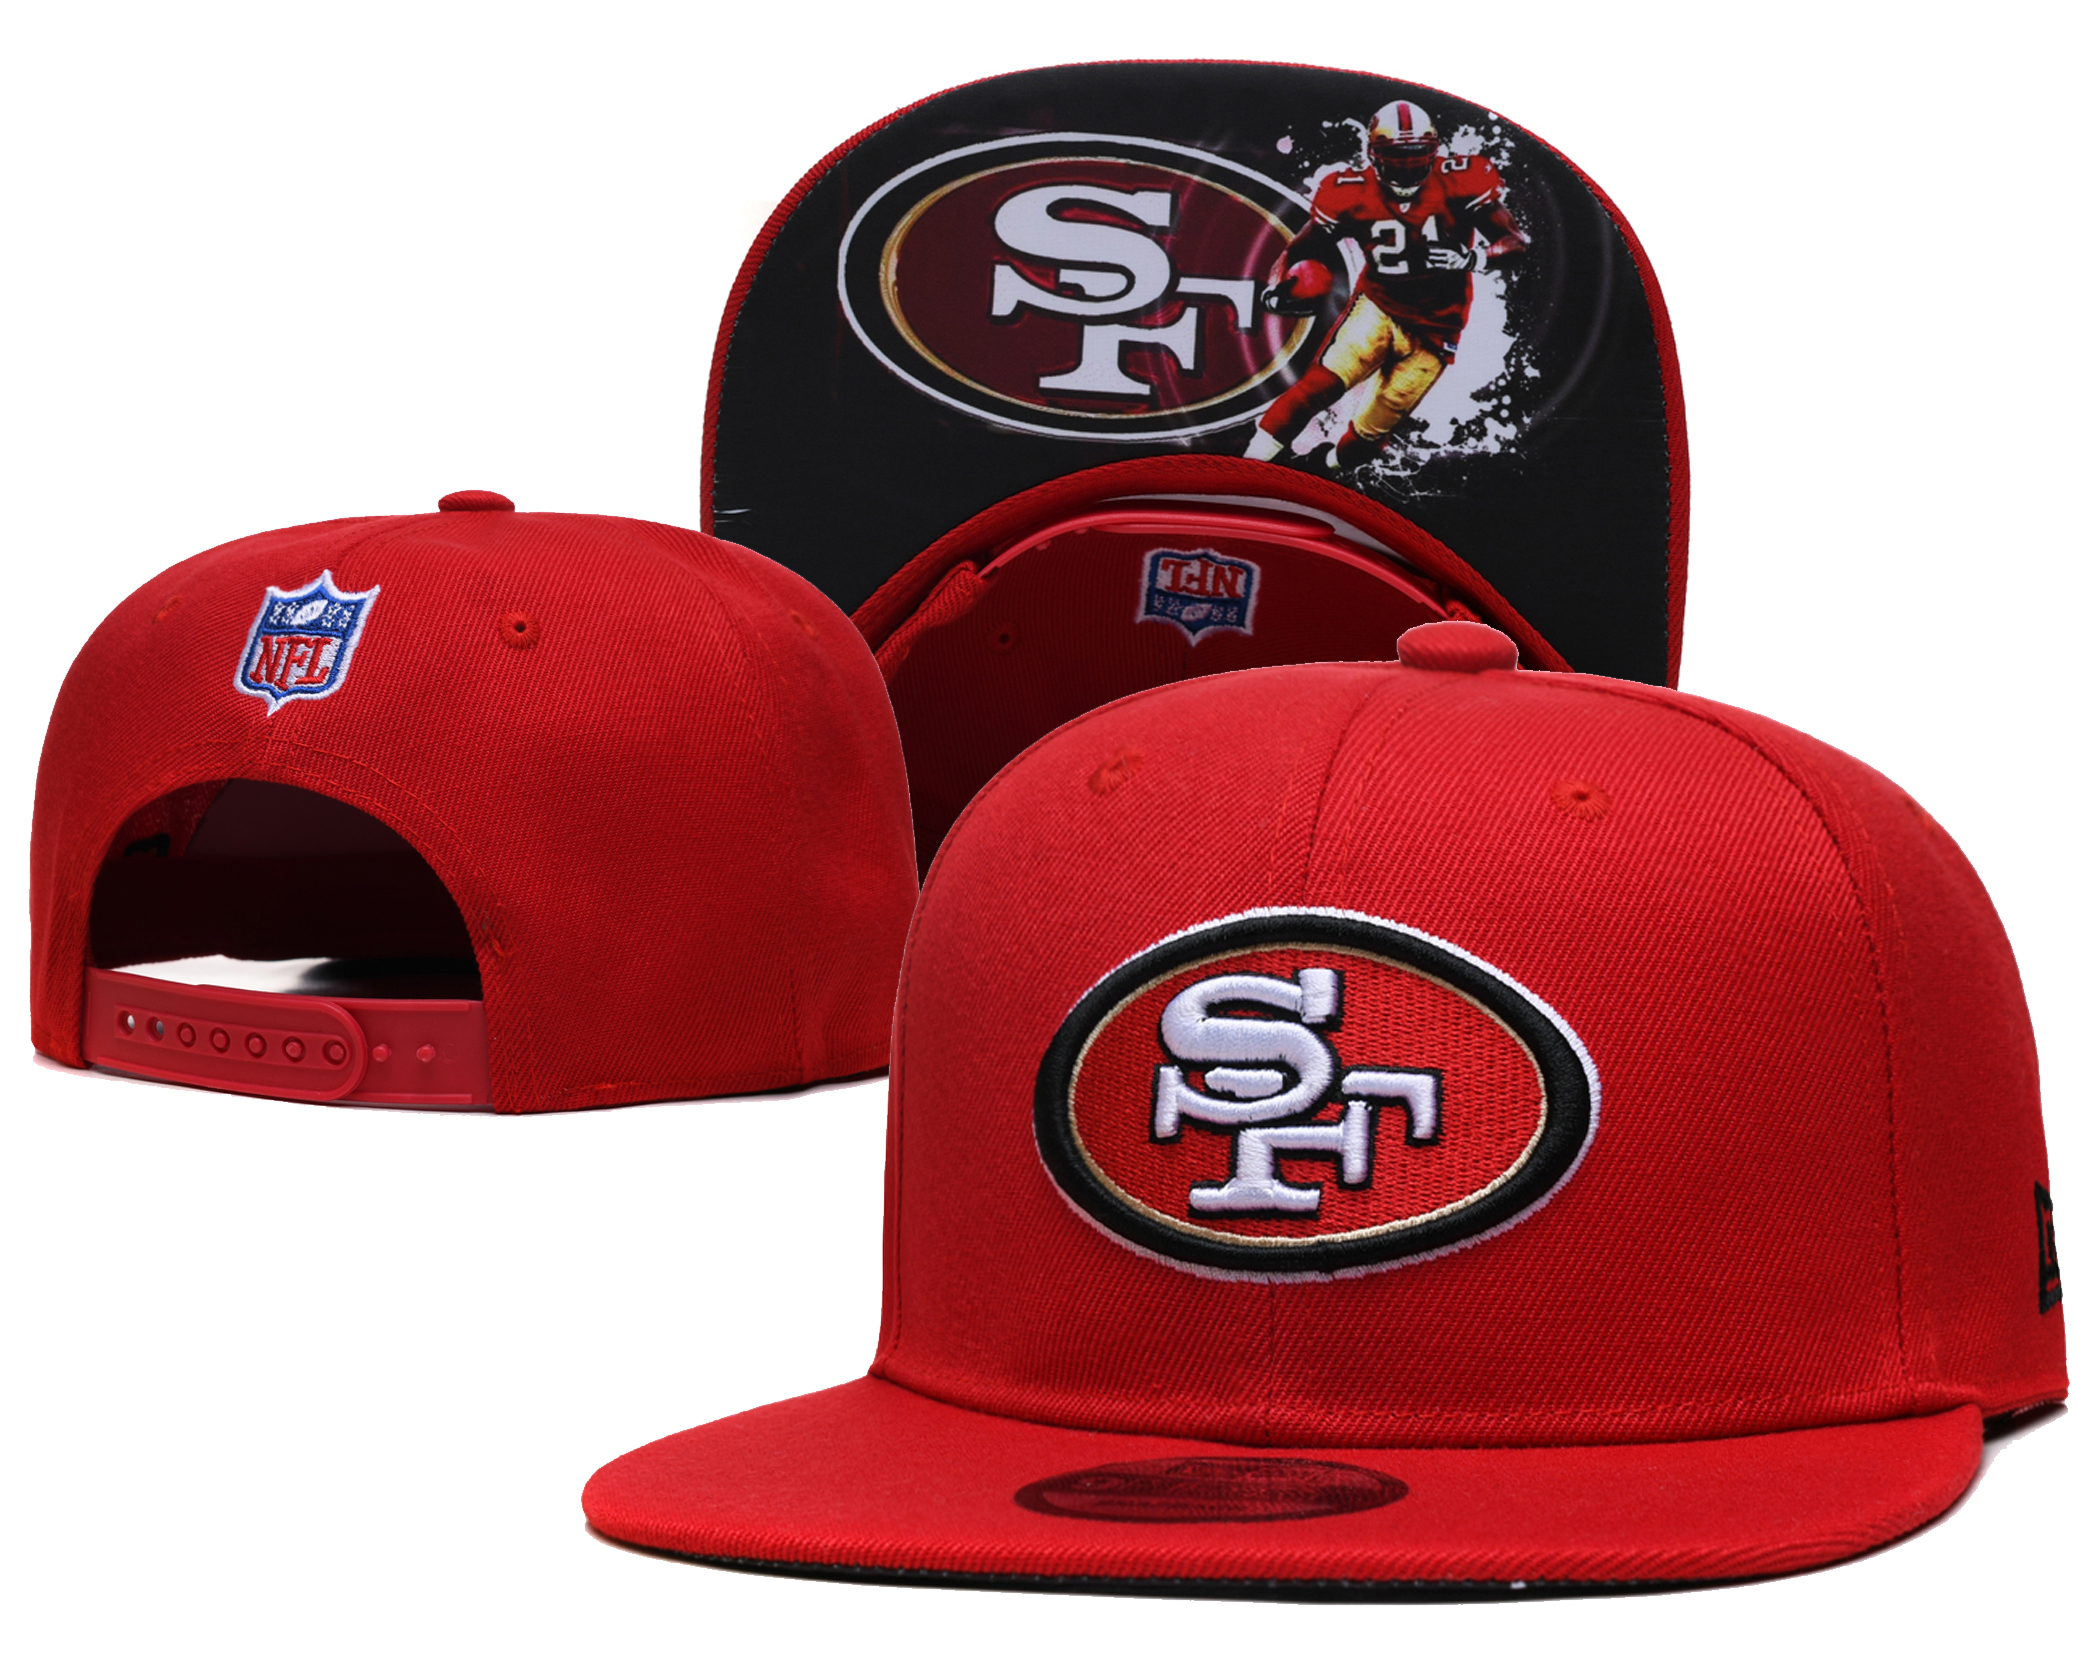 2021 NFL San Francisco 49ers 111 TX hat